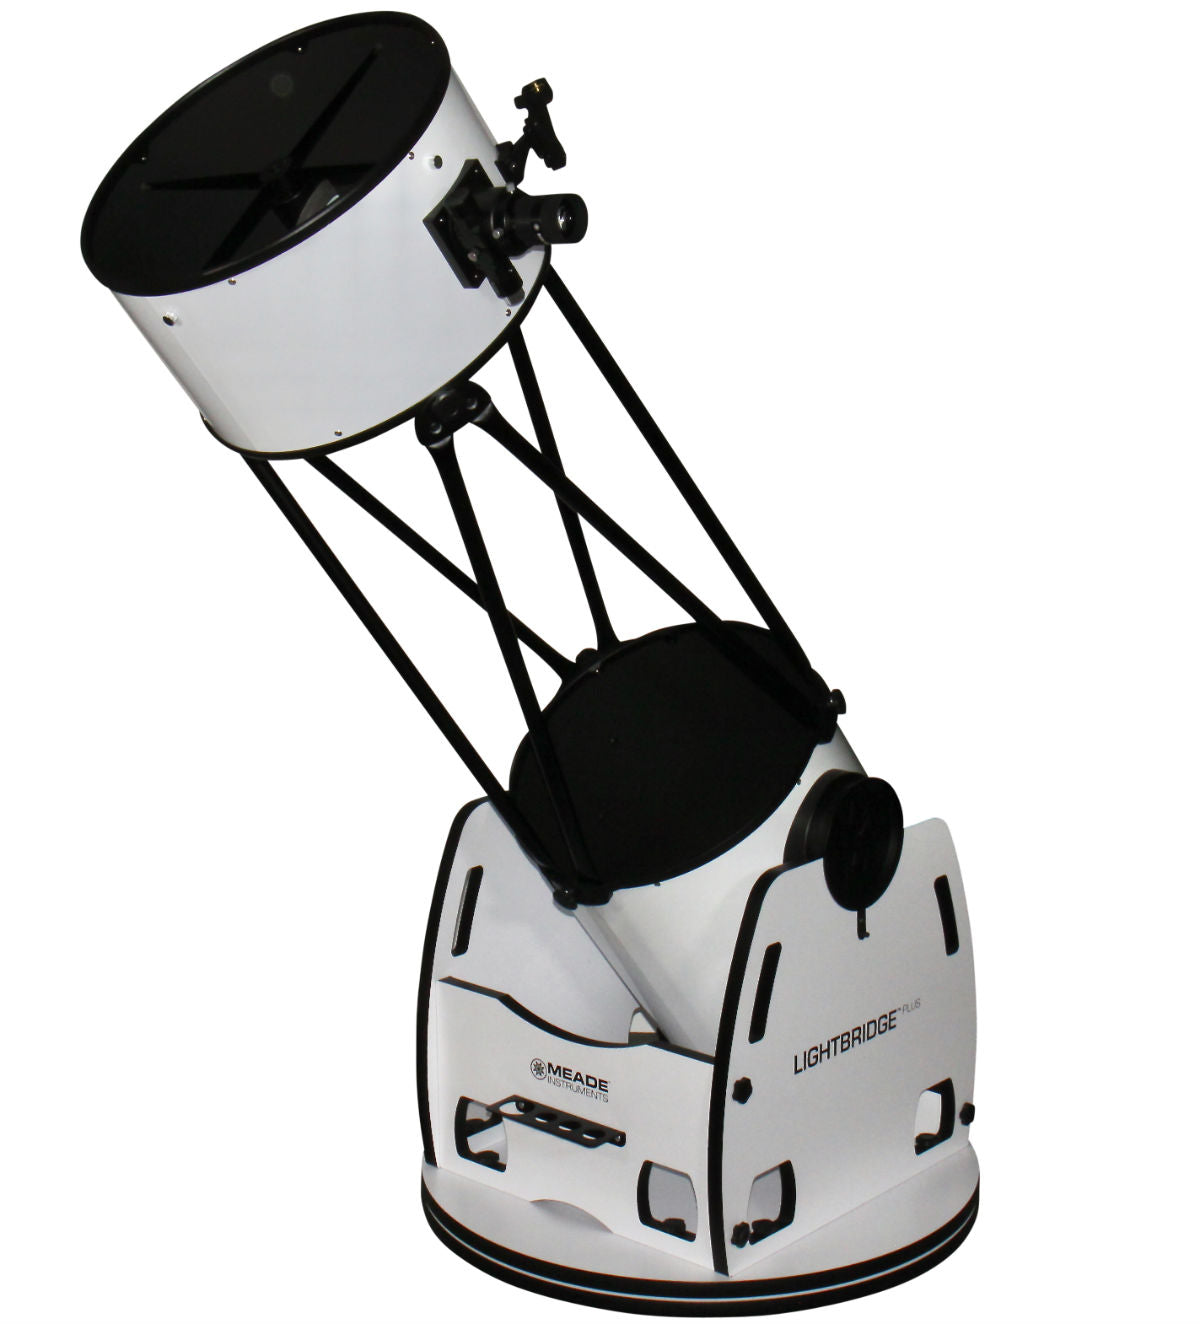 Meade Lightbridge 16 Truss Tube Dobsonian Telescope